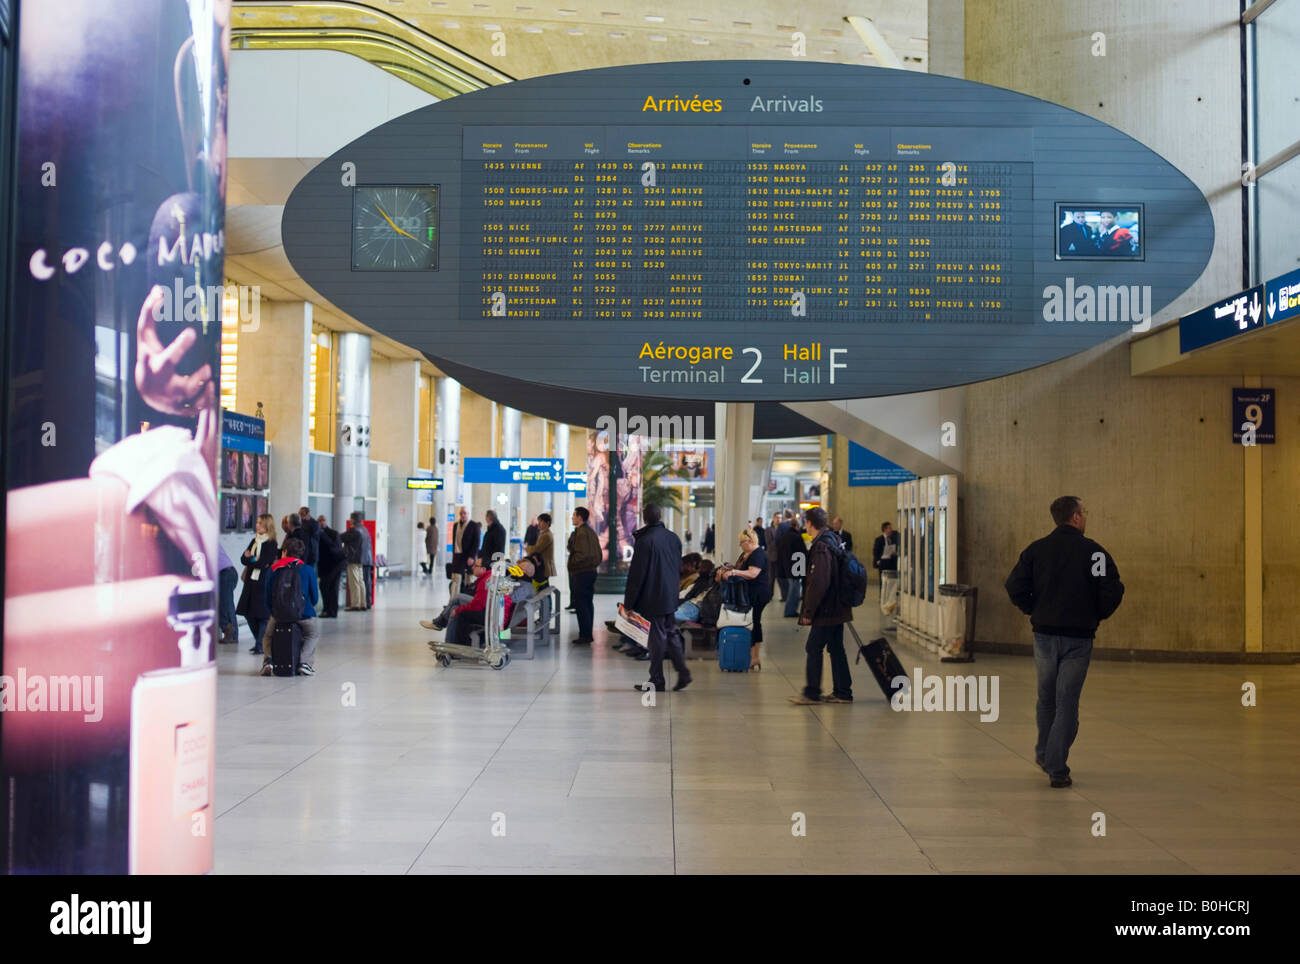 Arrivals board, flight information in terminal 2, Charles de Gaulle International Airport, Paris, France, Europe Stock Photo